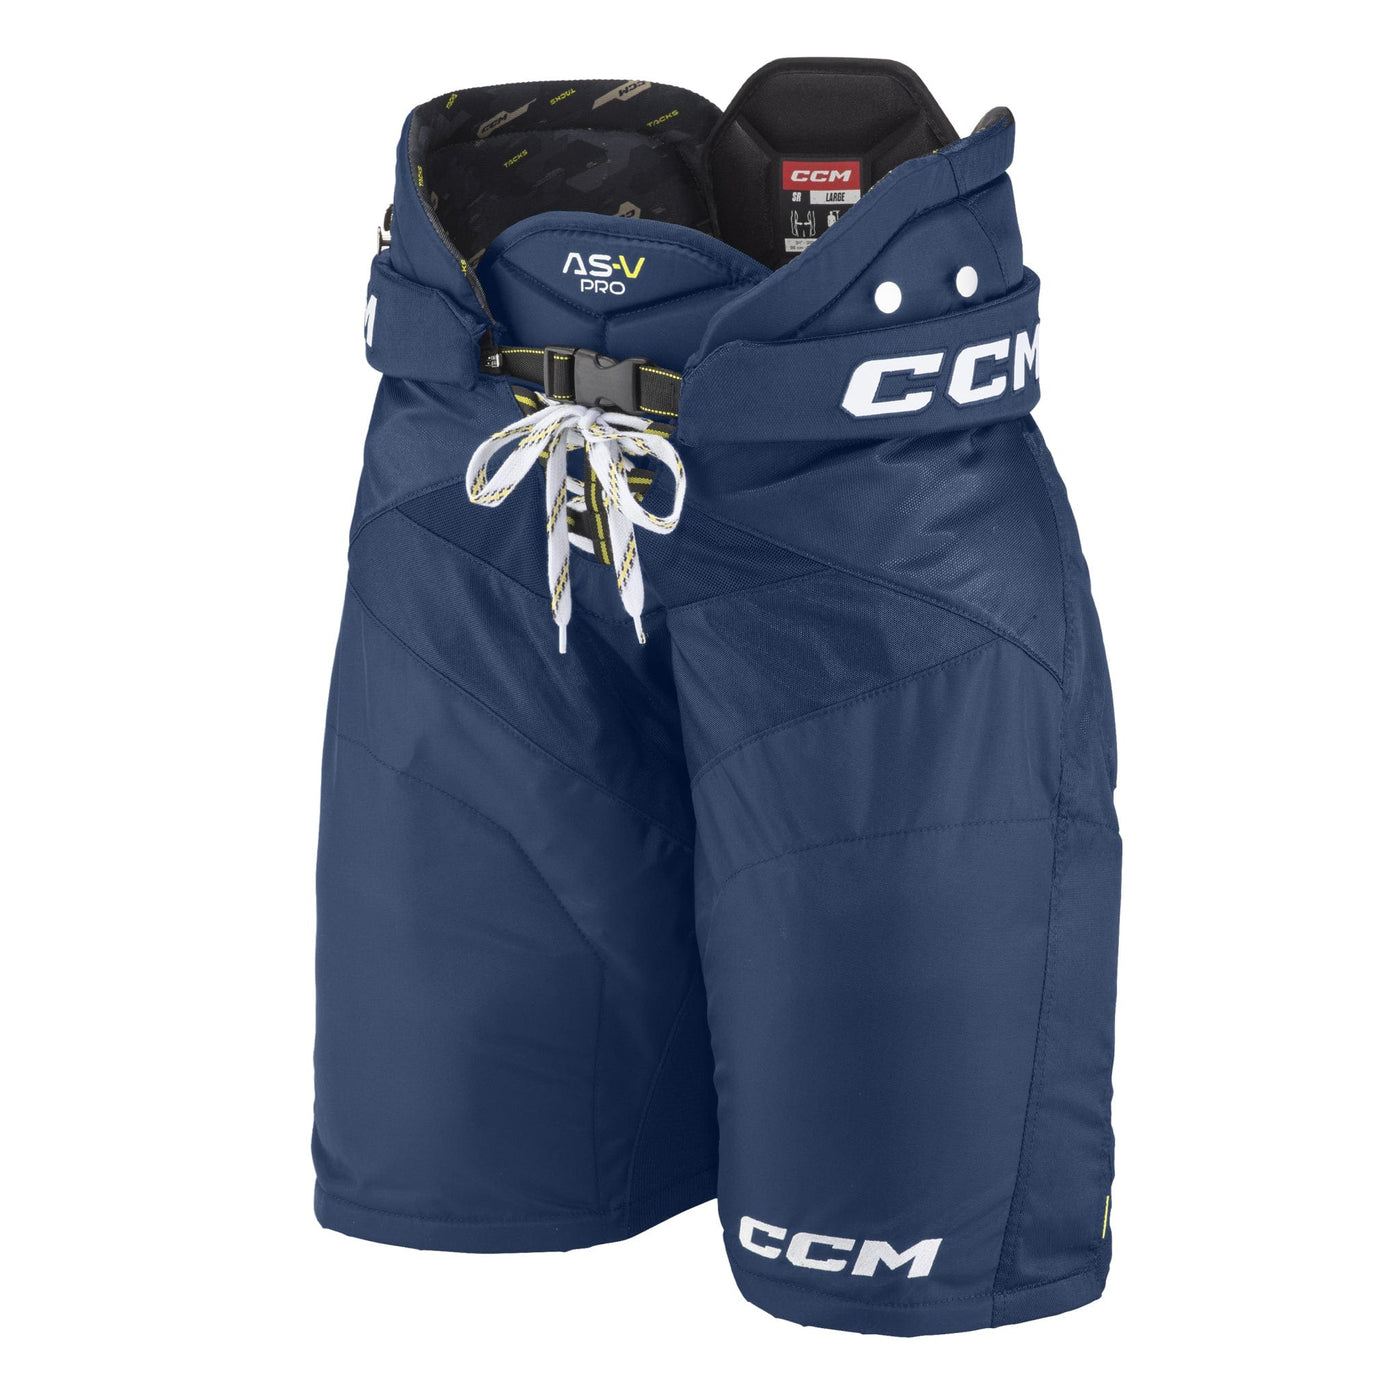 CCM Tacks AS-V Pro Senior Hockey Pants - The Hockey Shop Source For Sports